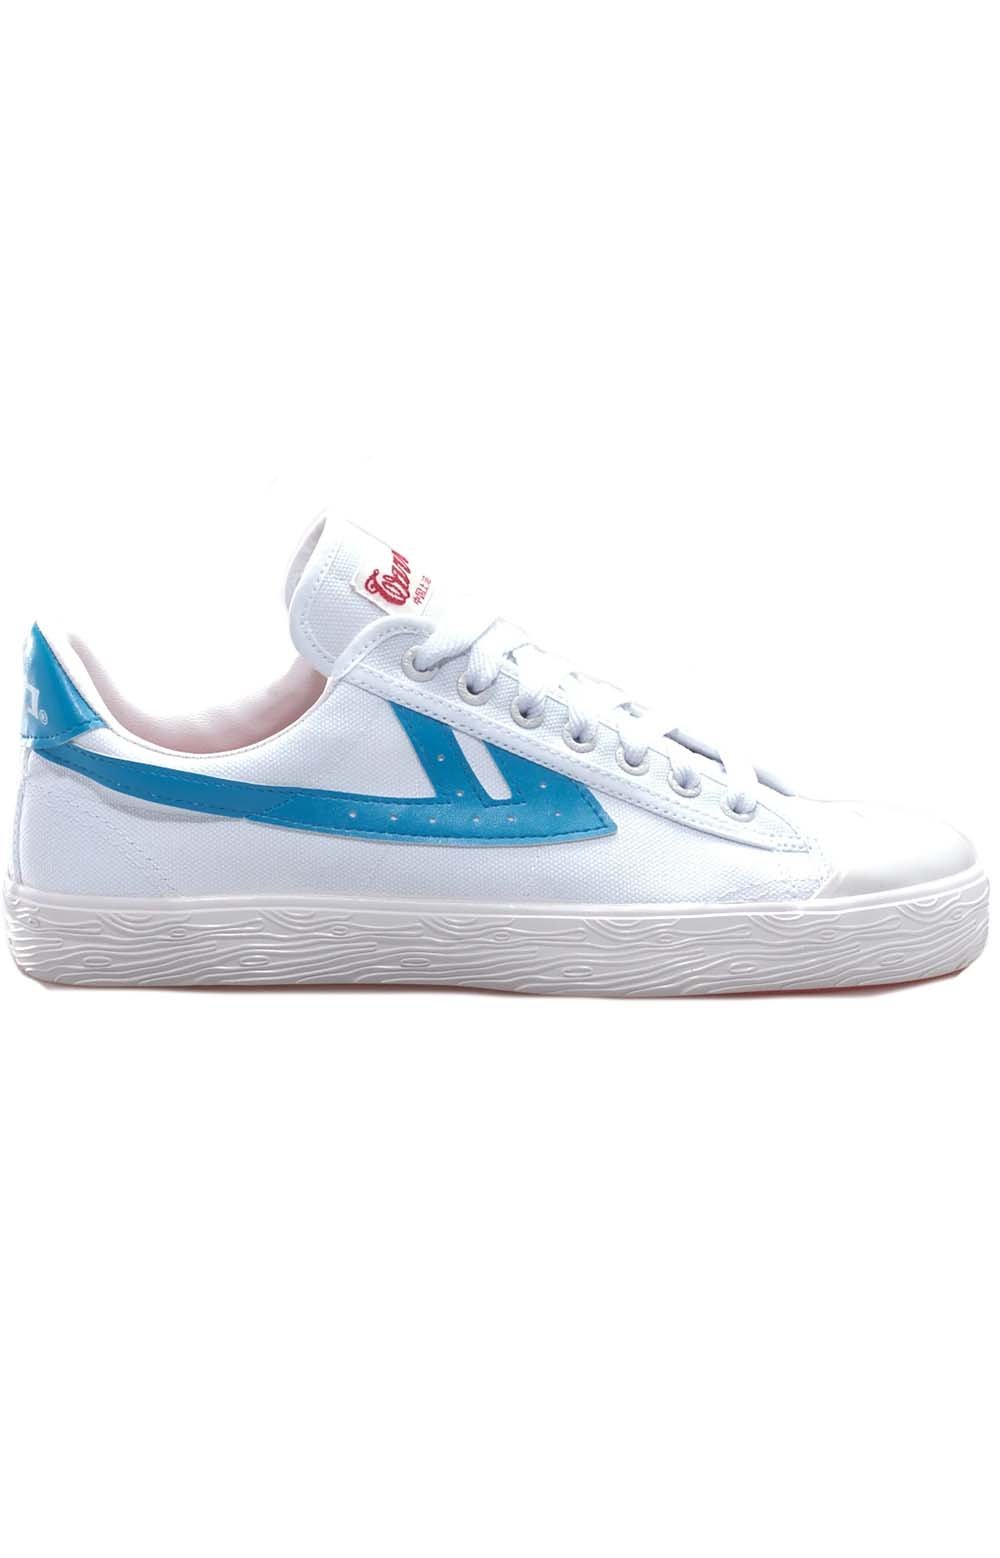 WB-1 Shoes - White/Blue